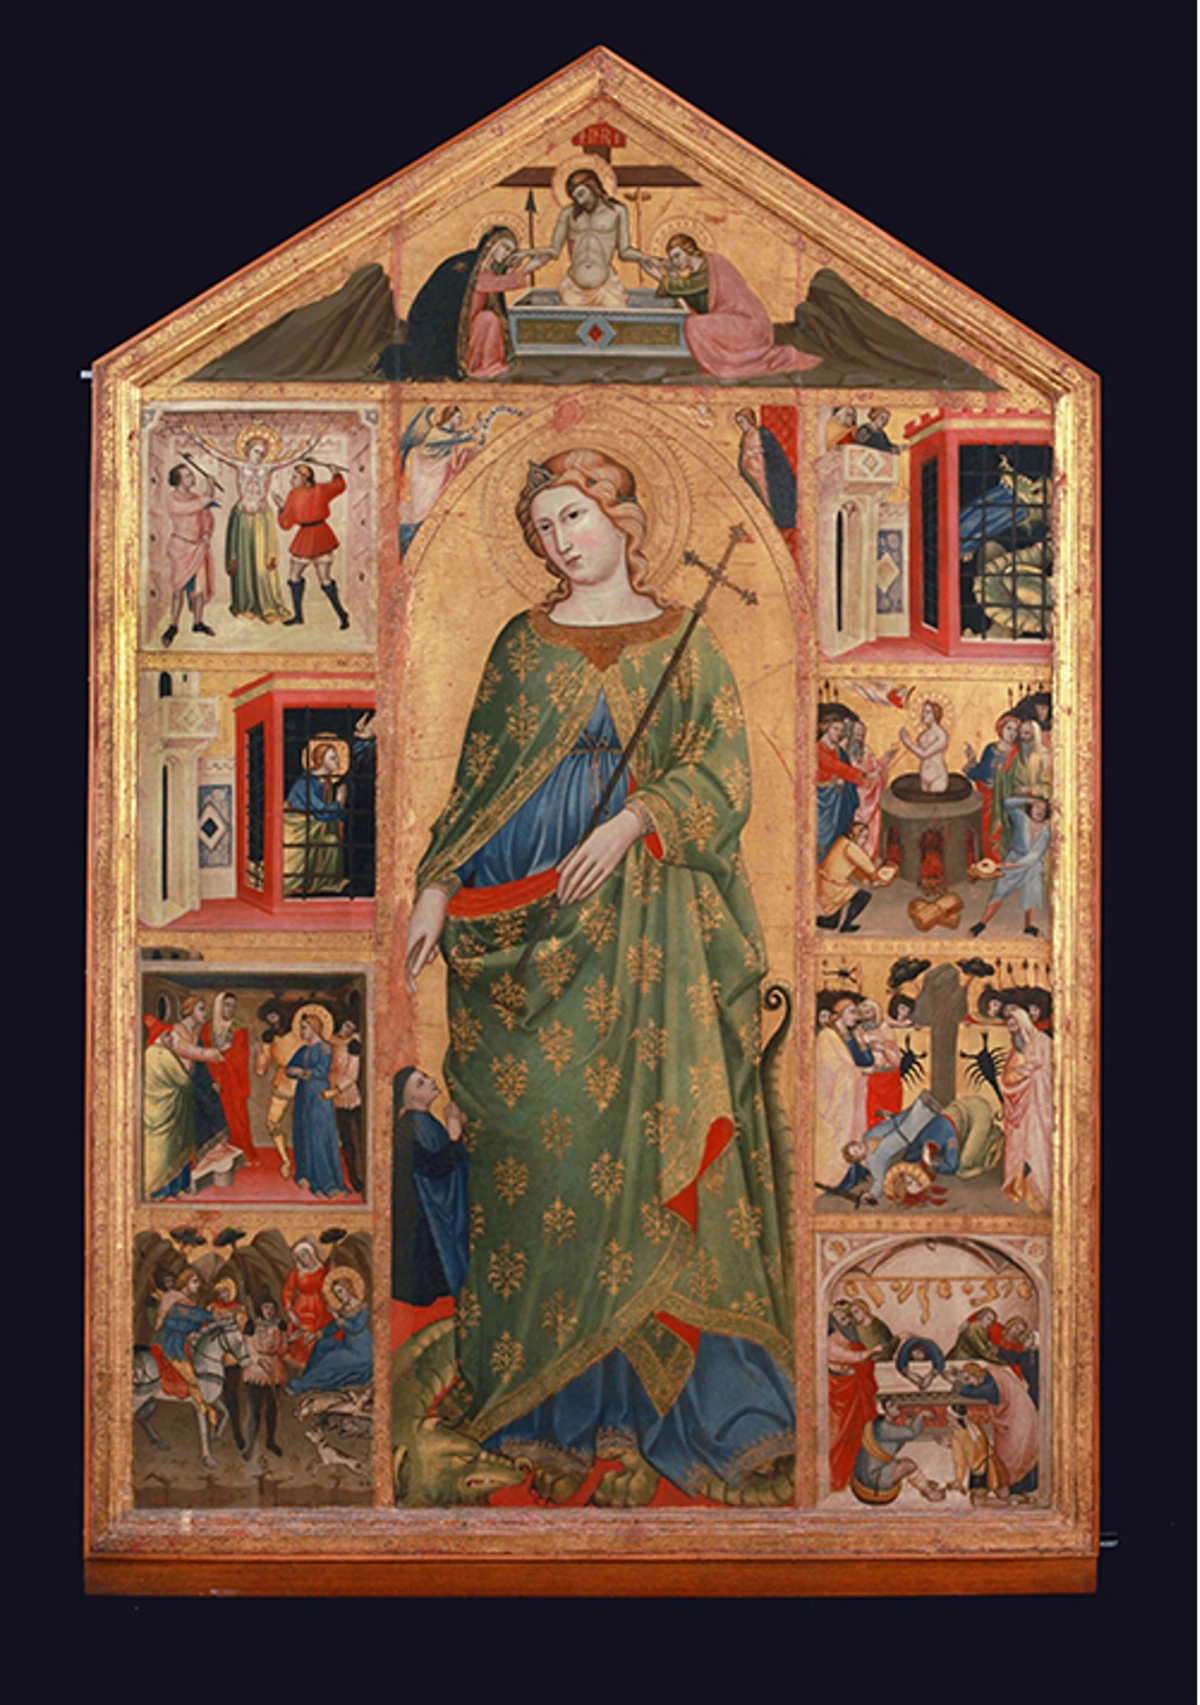 My fav saints: St Margaret of Antioch